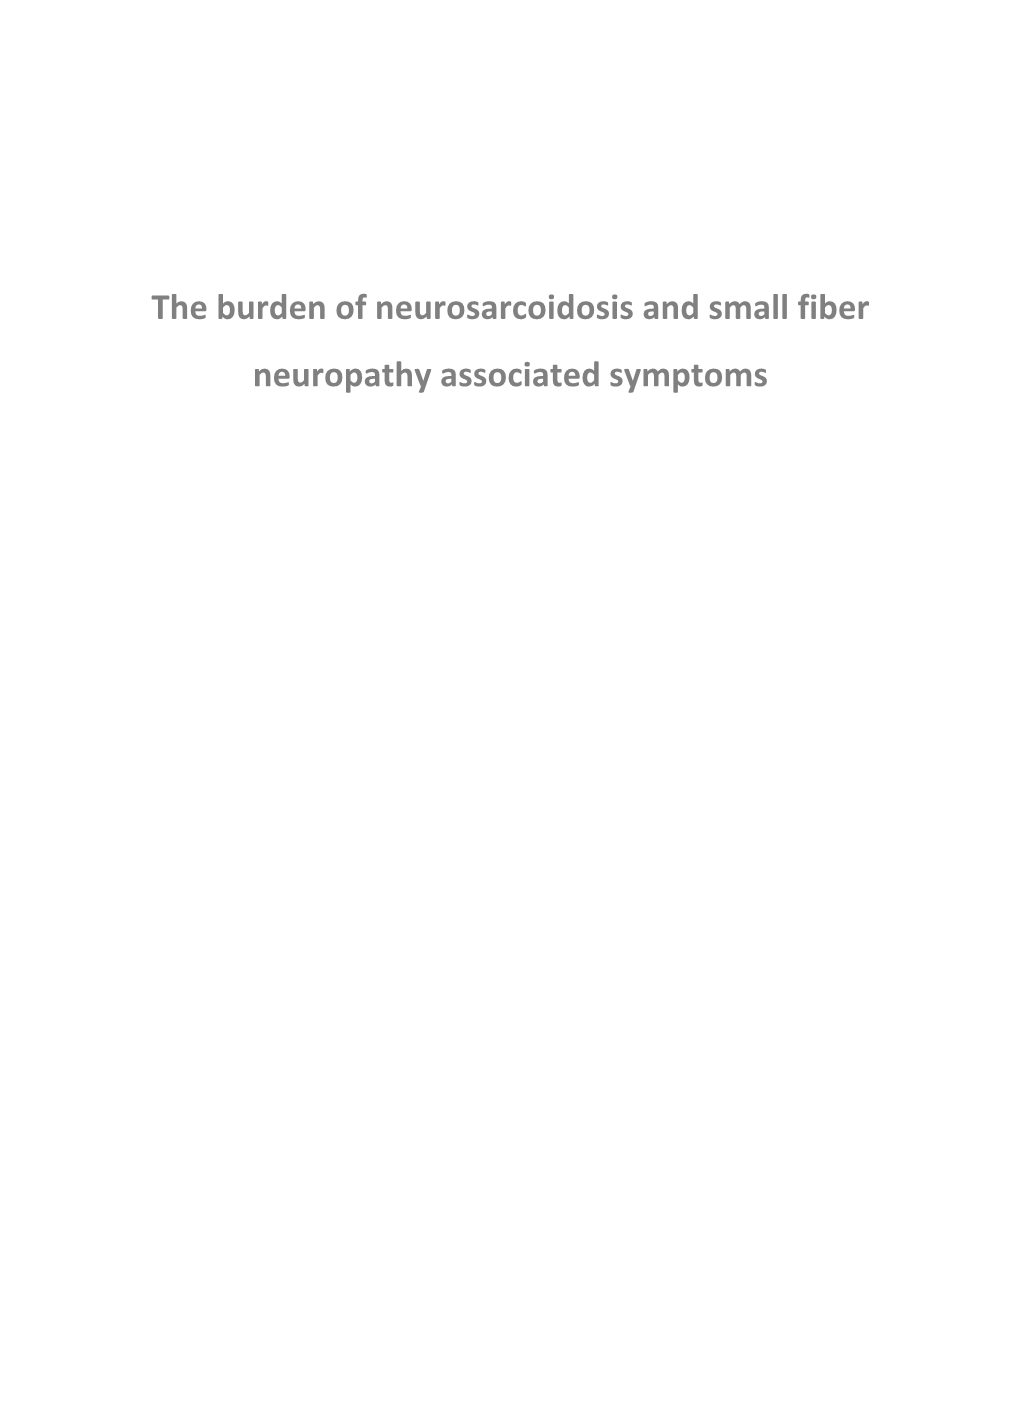 The Burden of Neurosarcoidosis and Small Fiber Neuropathy Associated